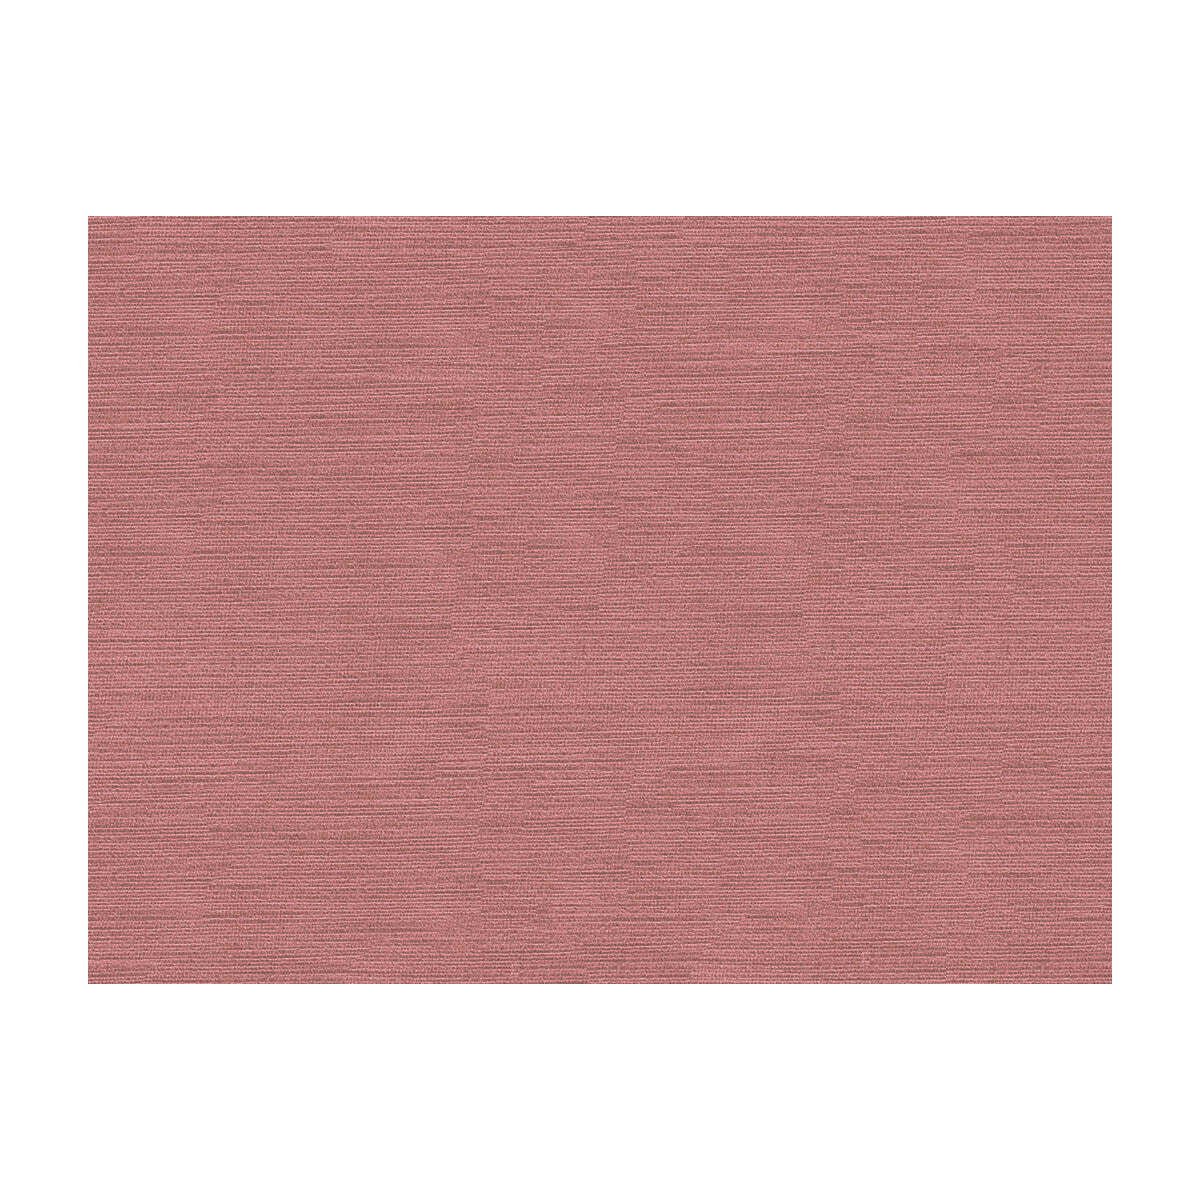 Quillan Velvet fabric in amethyst color - pattern BR-89777.733.0 - by Brunschwig &amp; Fils